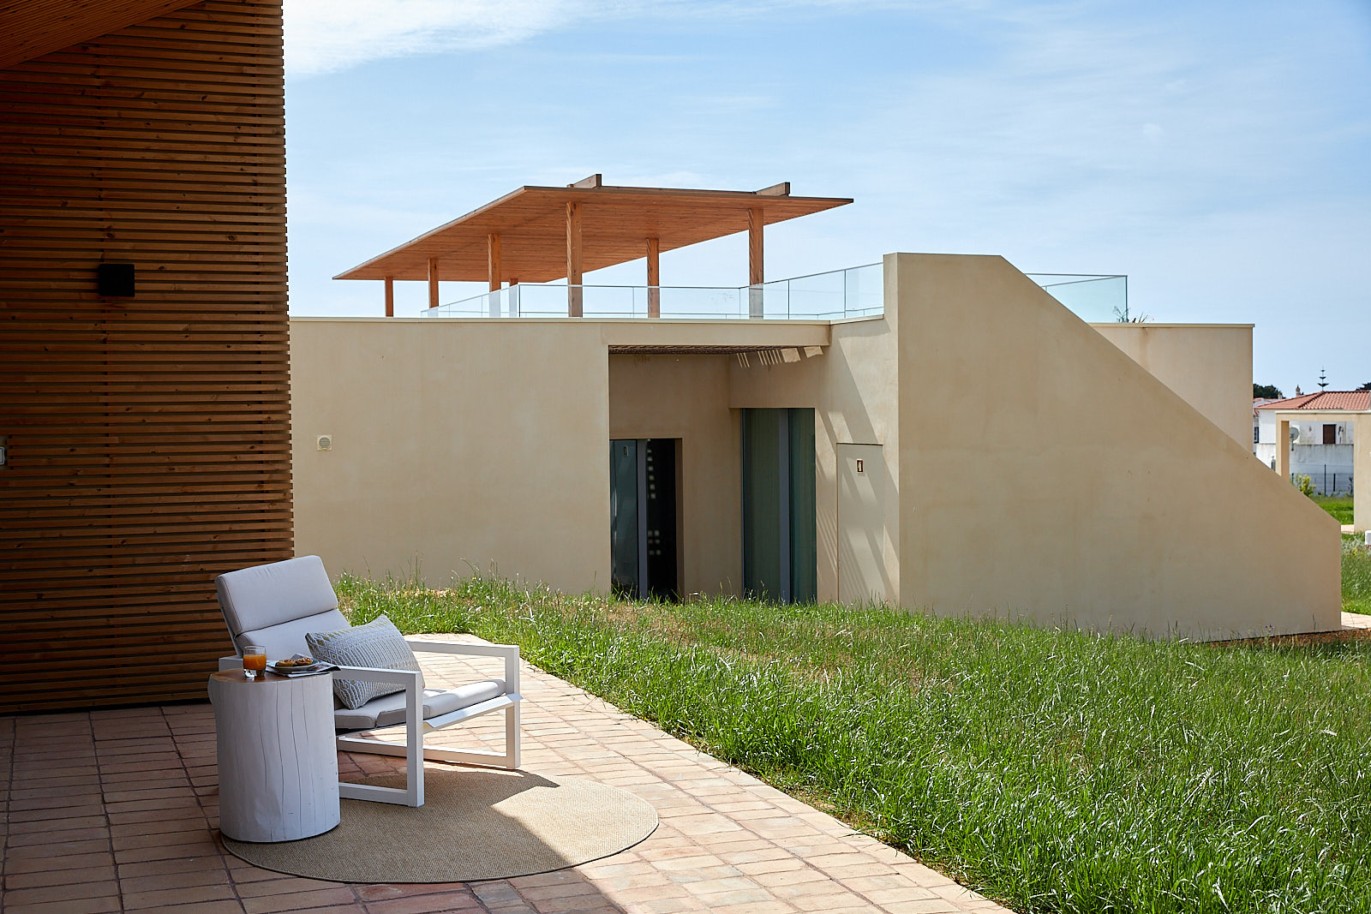 2 bedroom apartment in resort, for sale in Porches, Algarve_228954